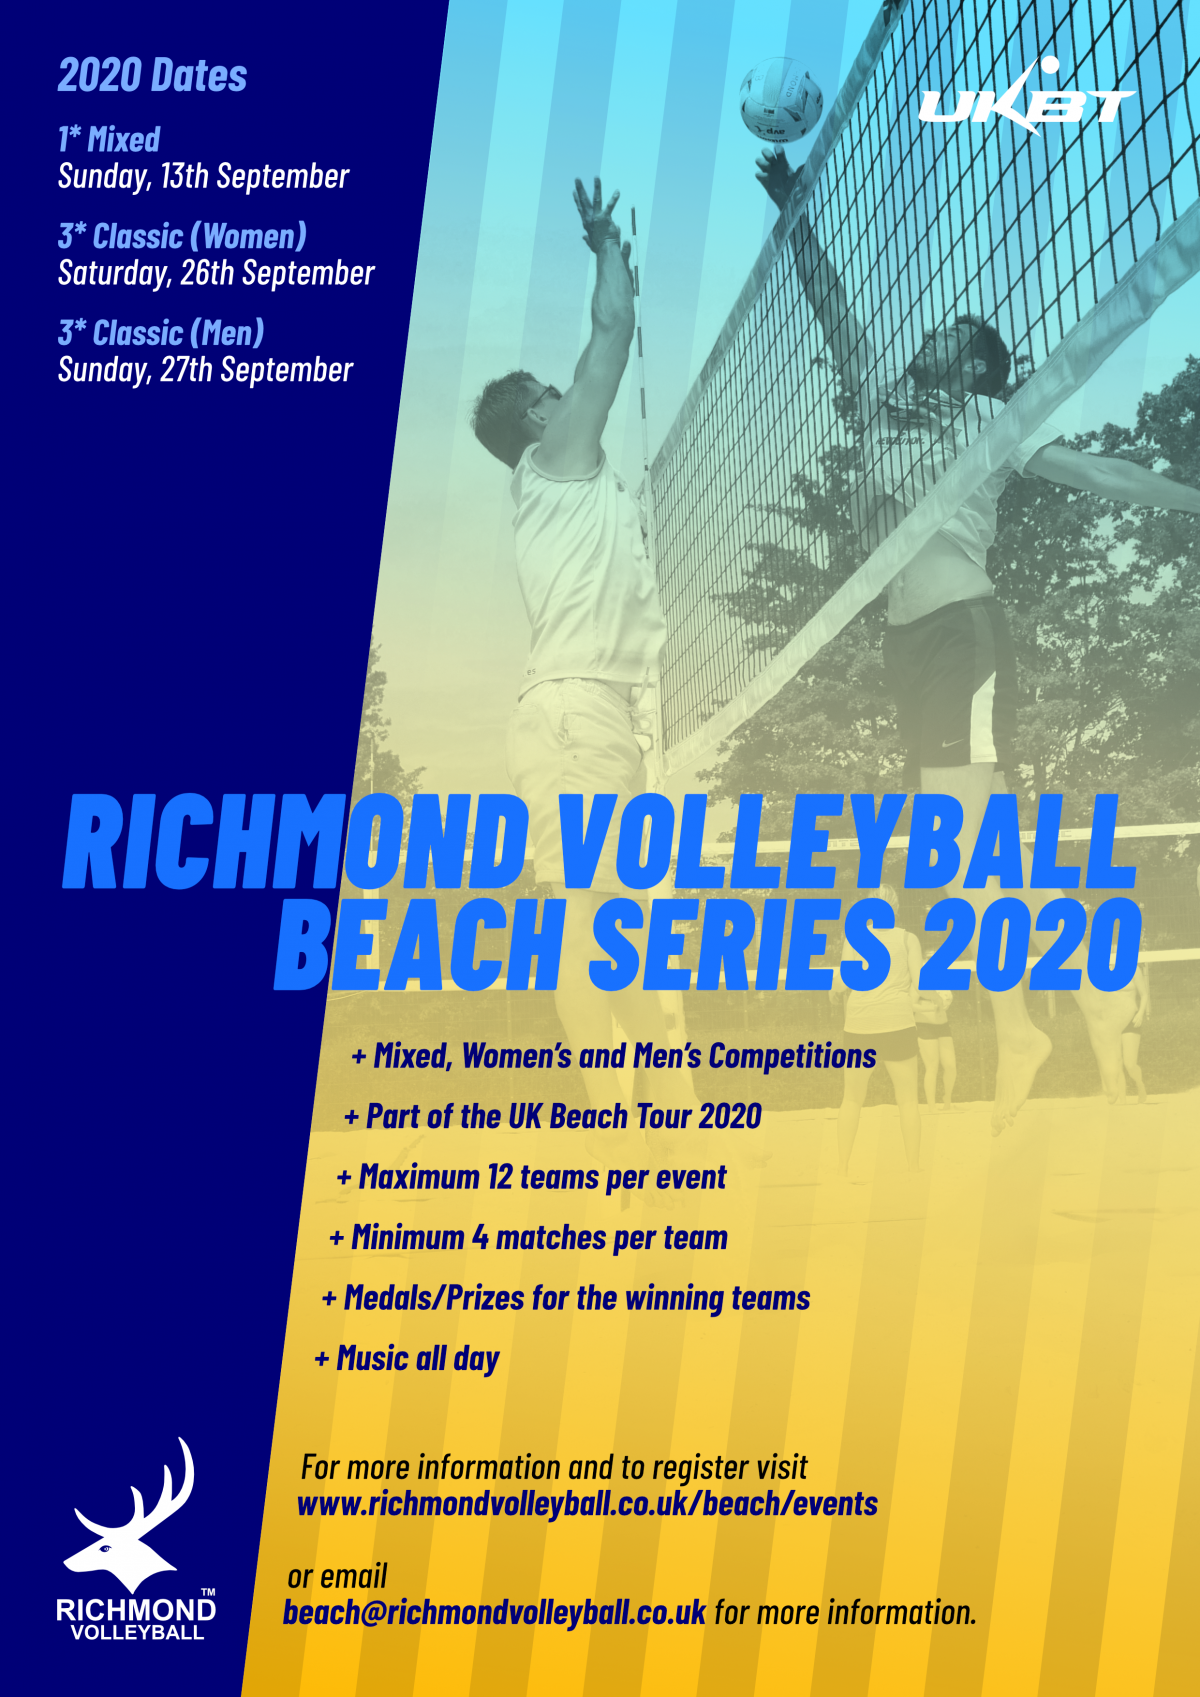 beach series 2020 poster